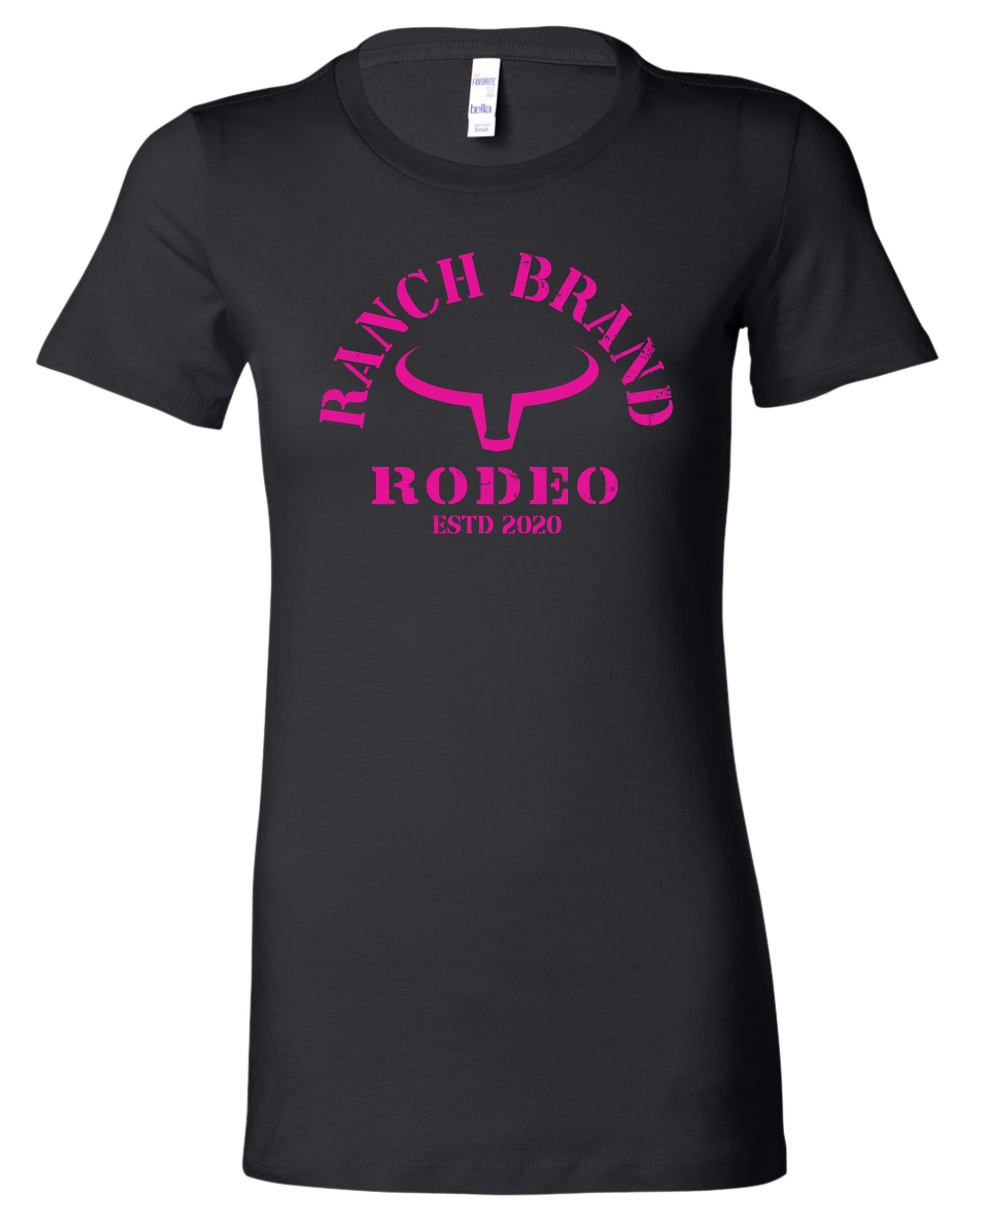 Ranch Brand | Rodeo Femme | Noir logo Rose